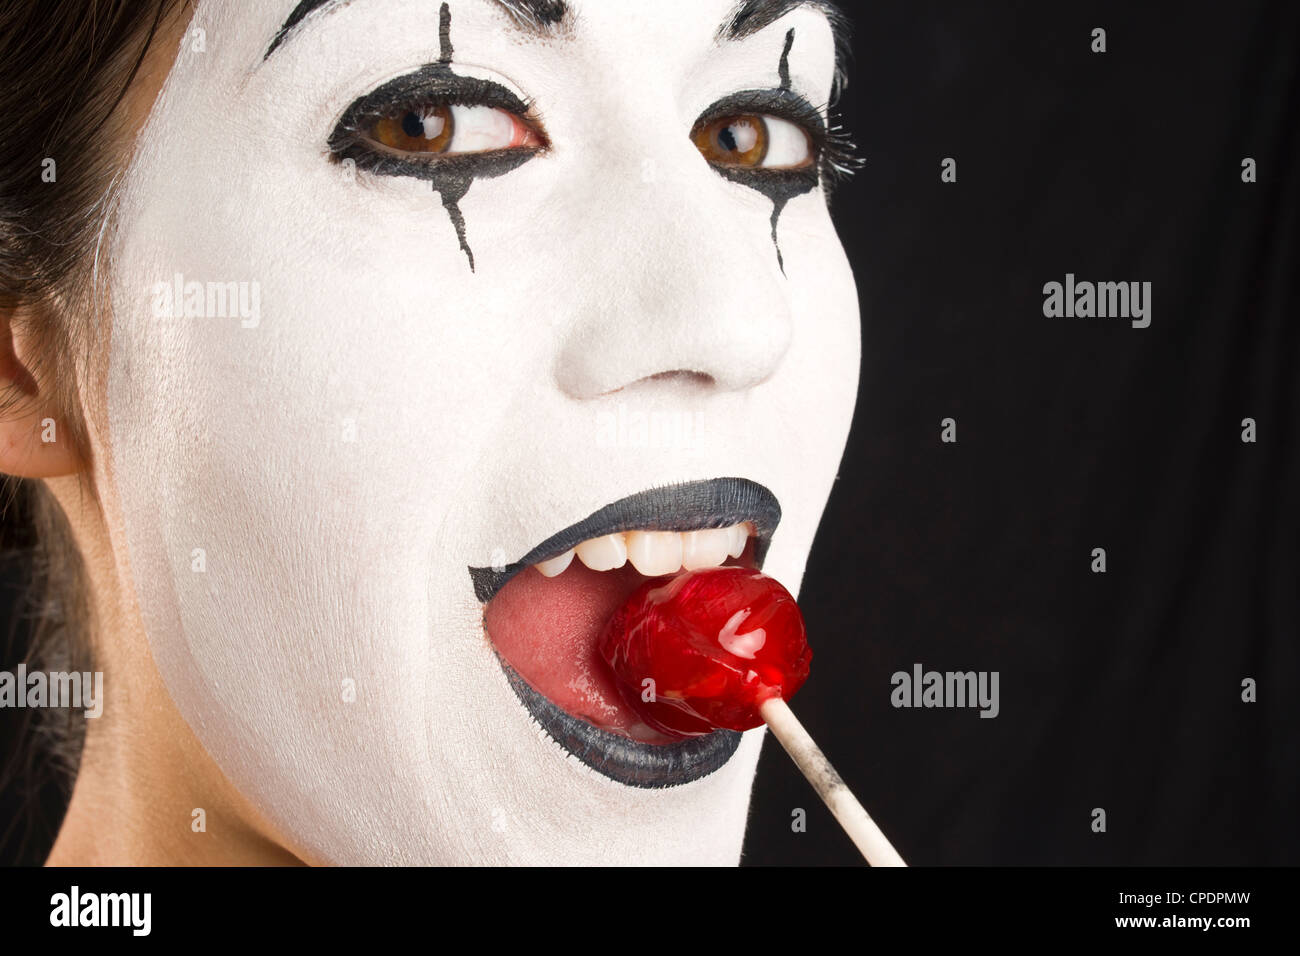 A Mime enjoys a lollipop in an up close portrait. Stock Photo